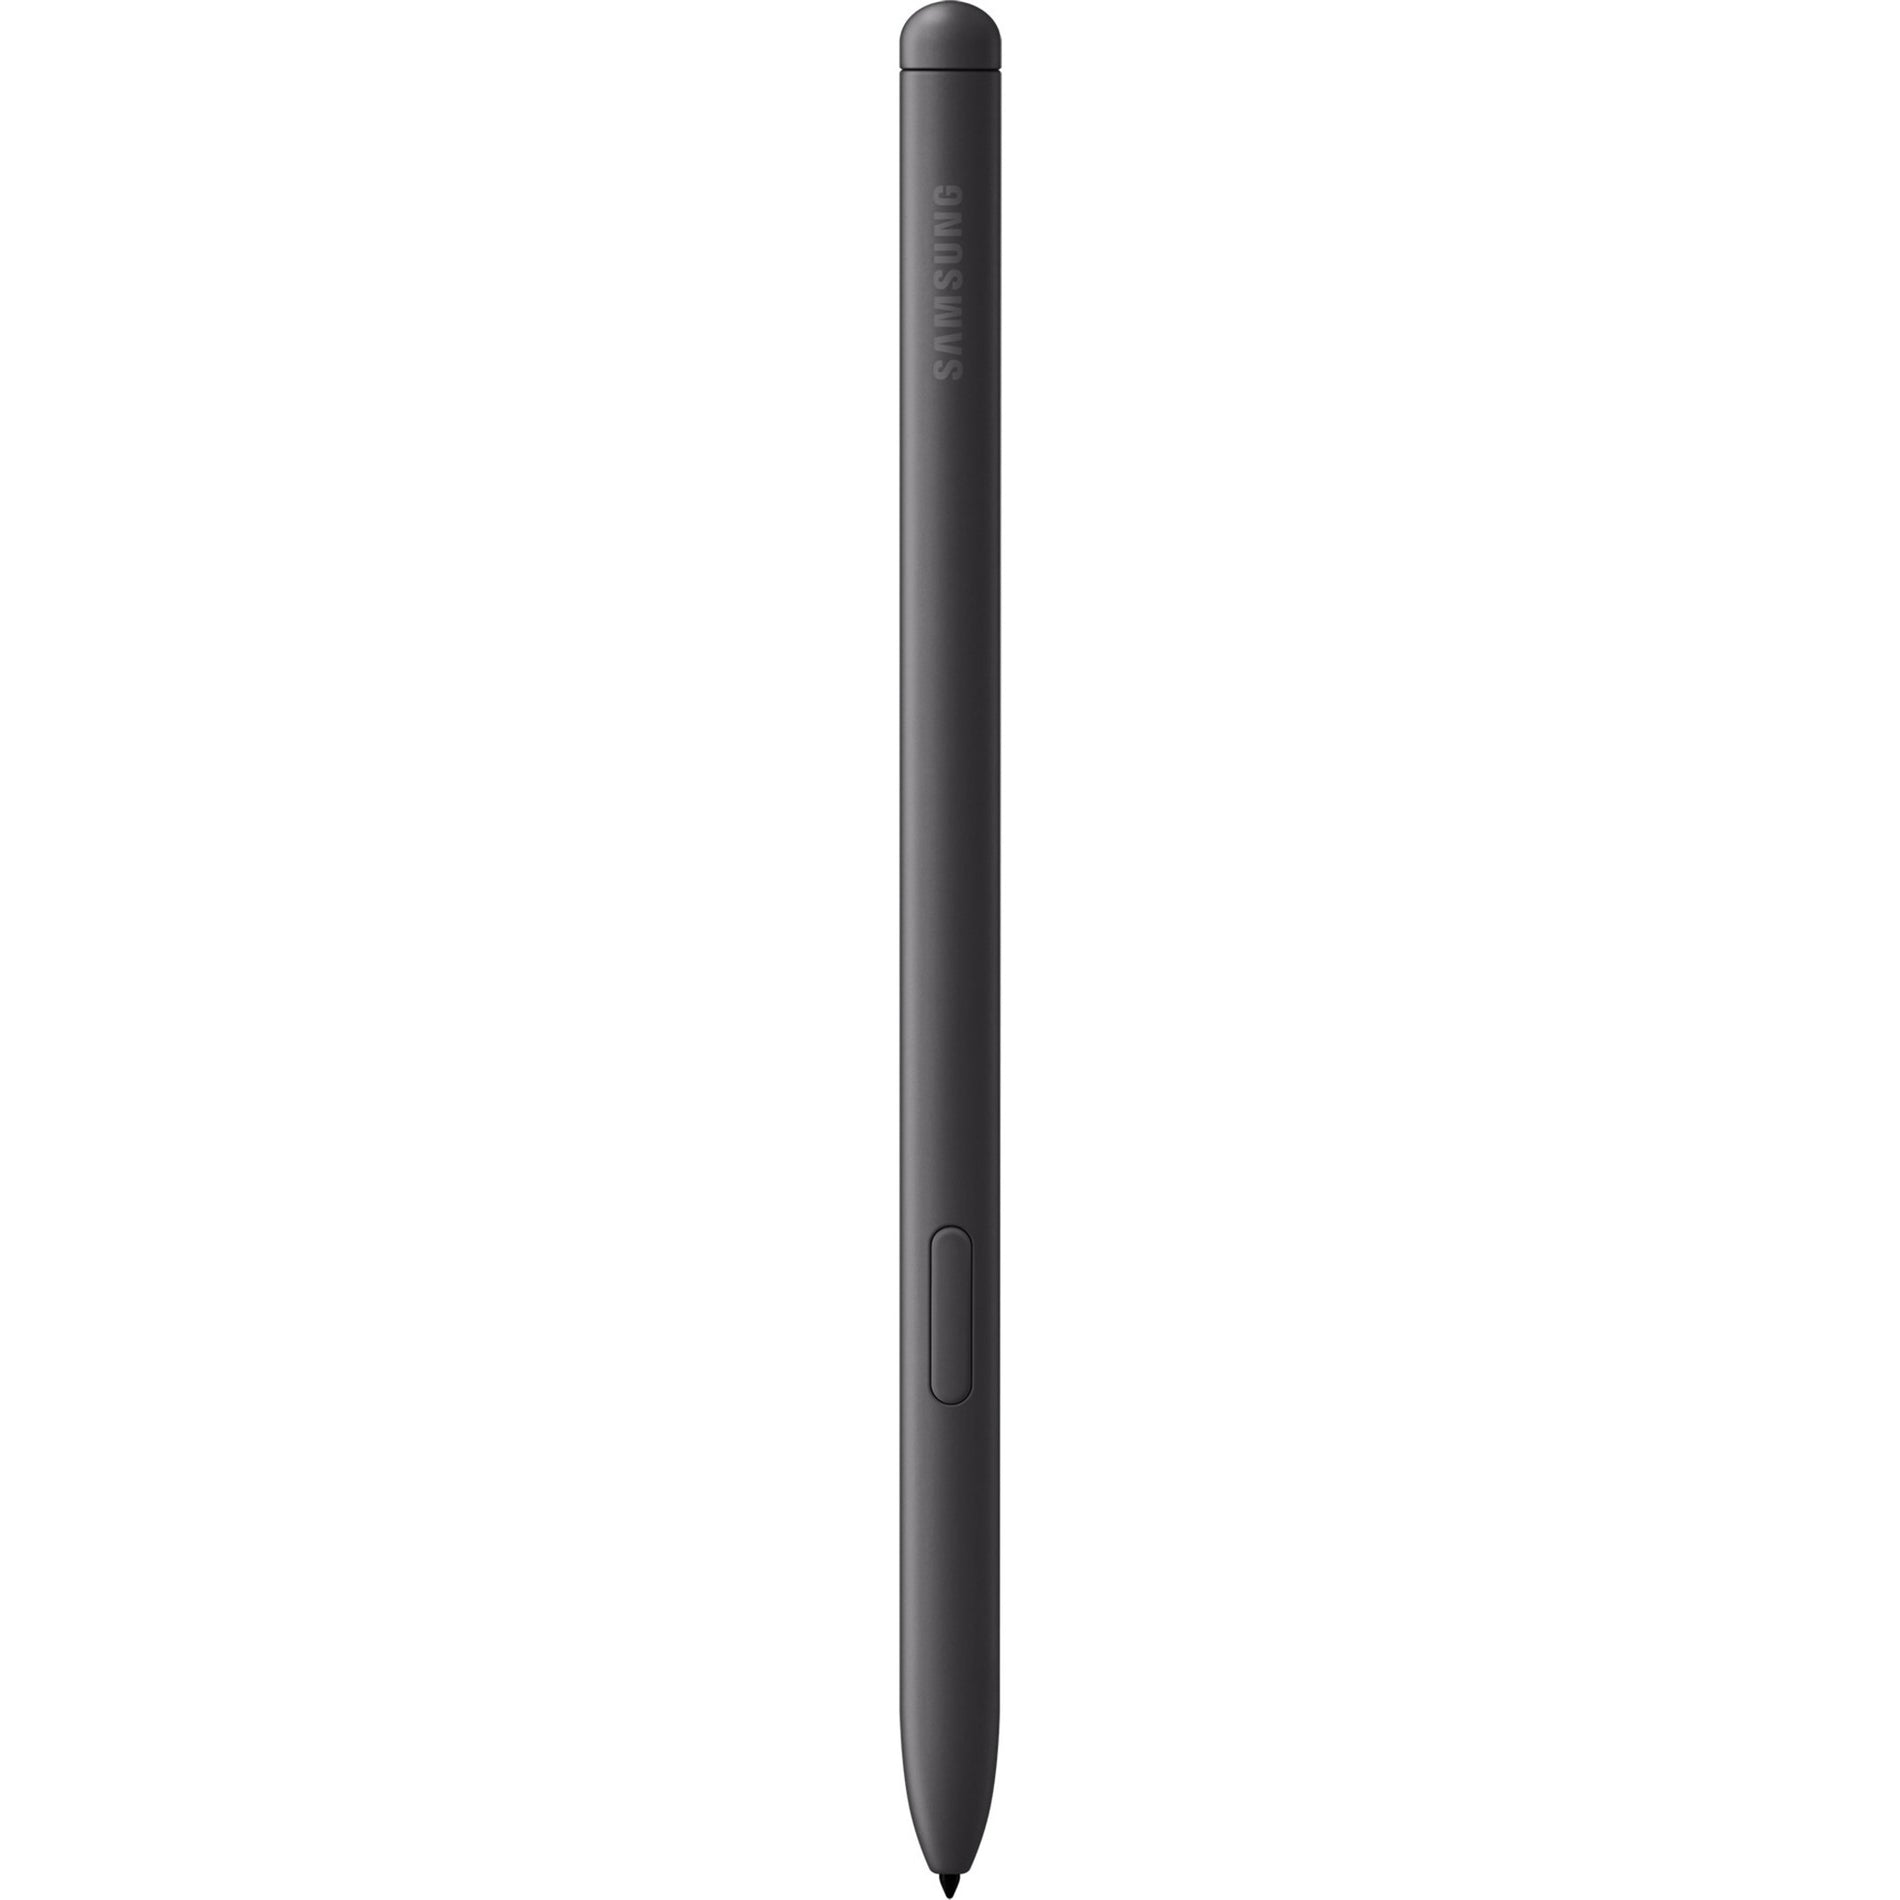 Samsung SM-P610NZAAXAR Galaxy Tab S6 Lite Tablet, 10.4" Oxford Gray, 64GB, WiFi